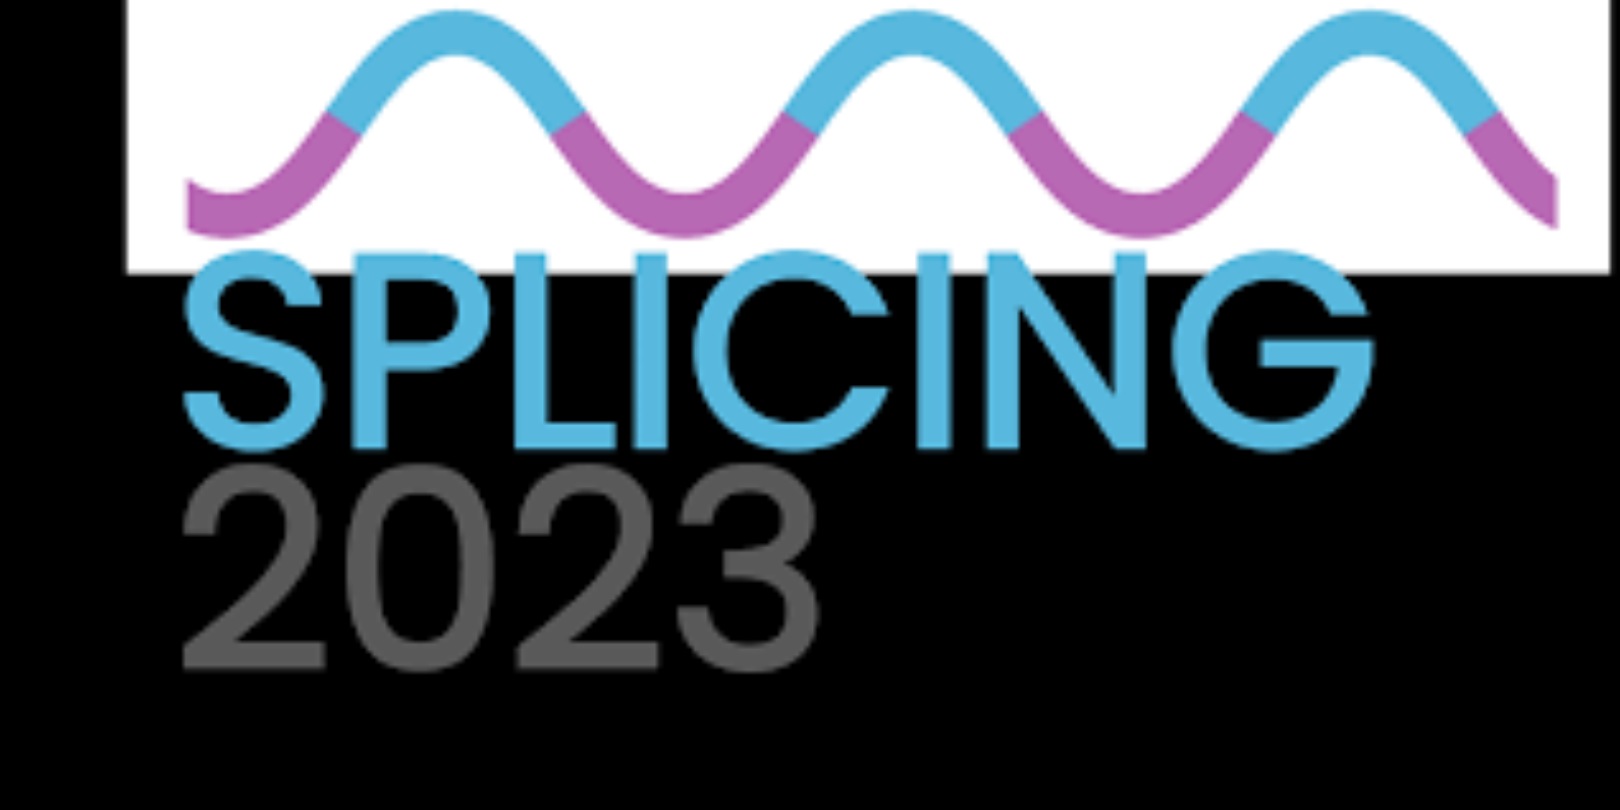 Splicing 2023